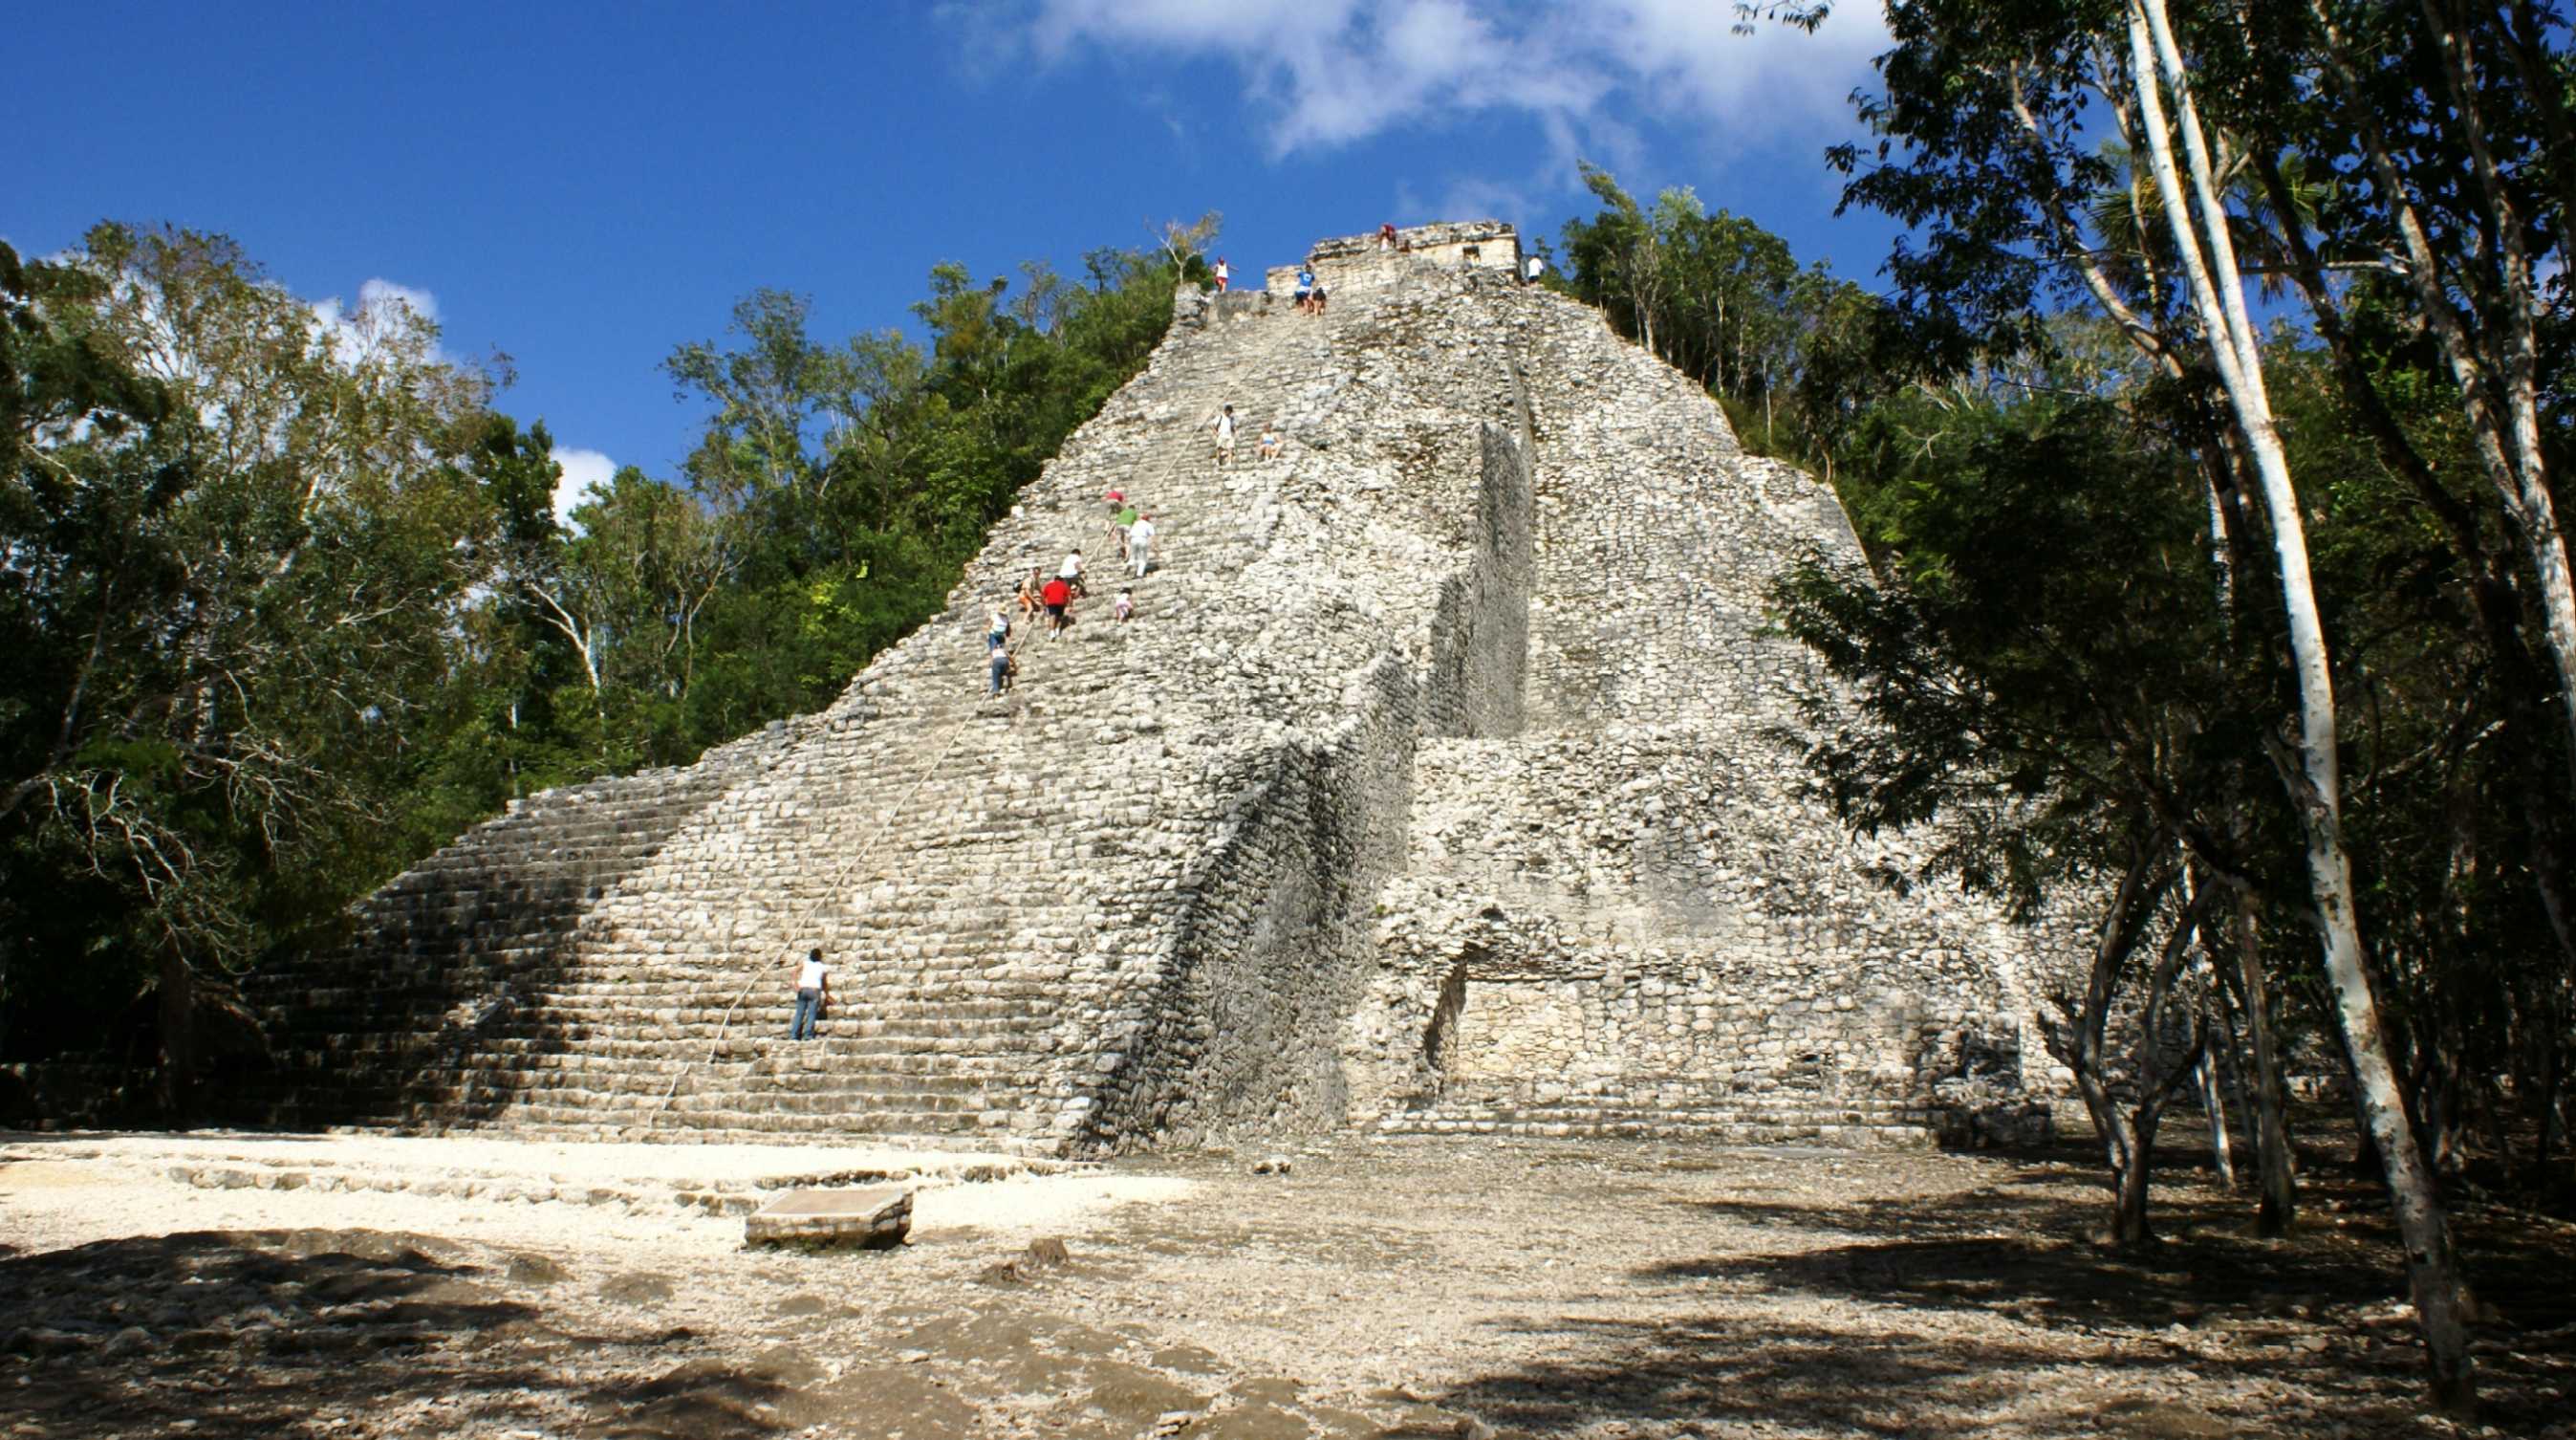 Mayan Ruin of Ichkabal